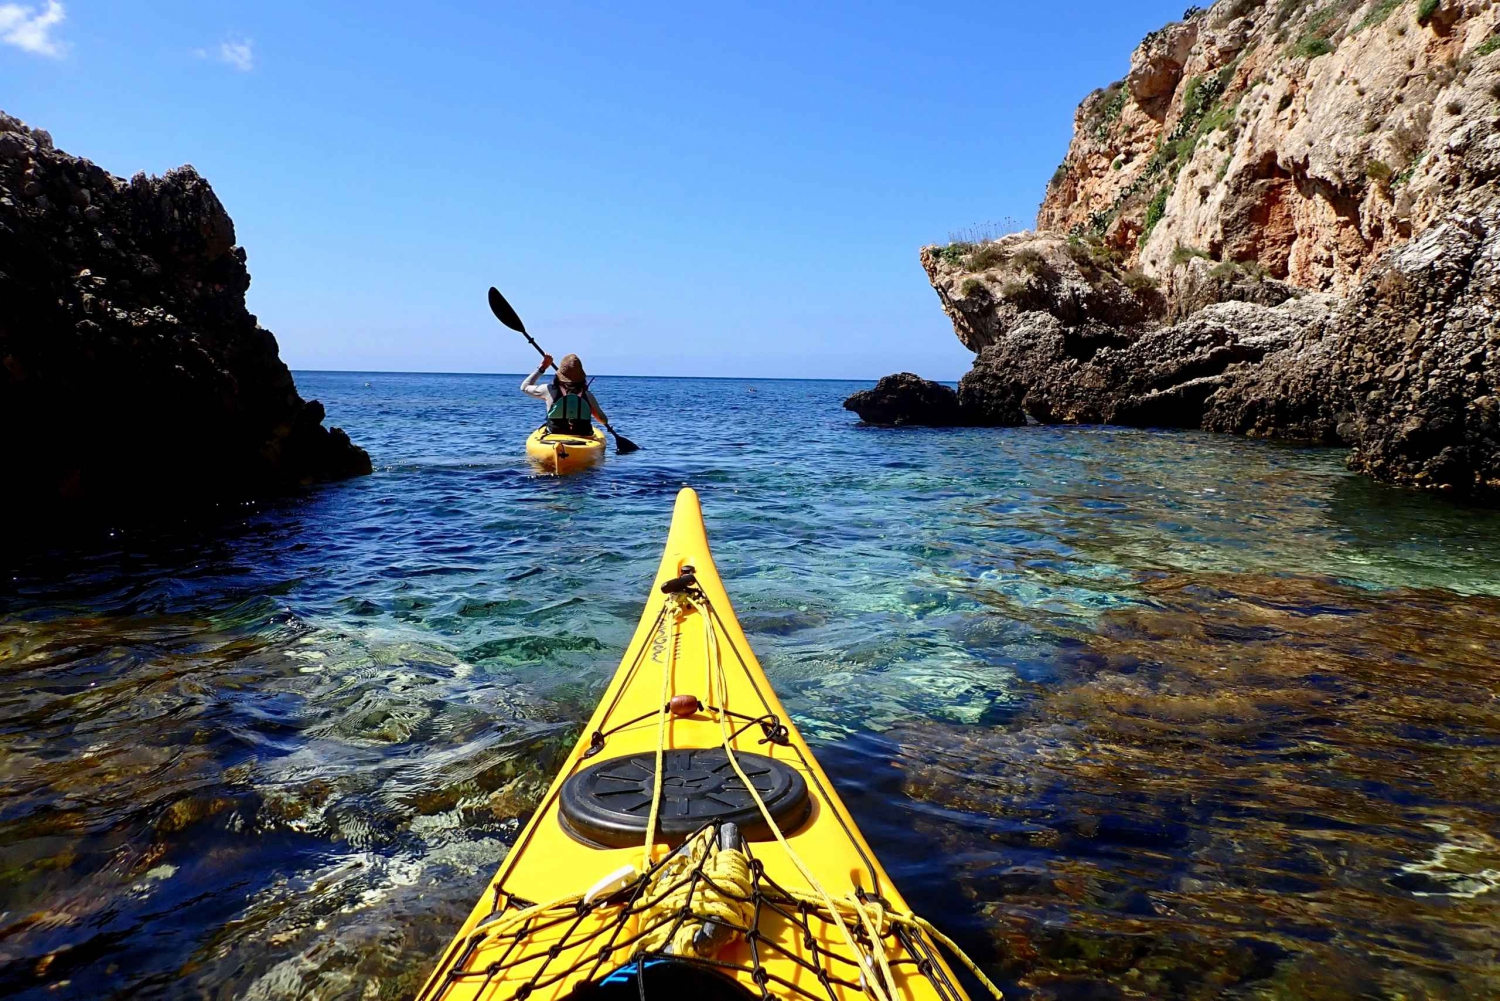 Favignana: kayak excursion, snorkelling and adventure